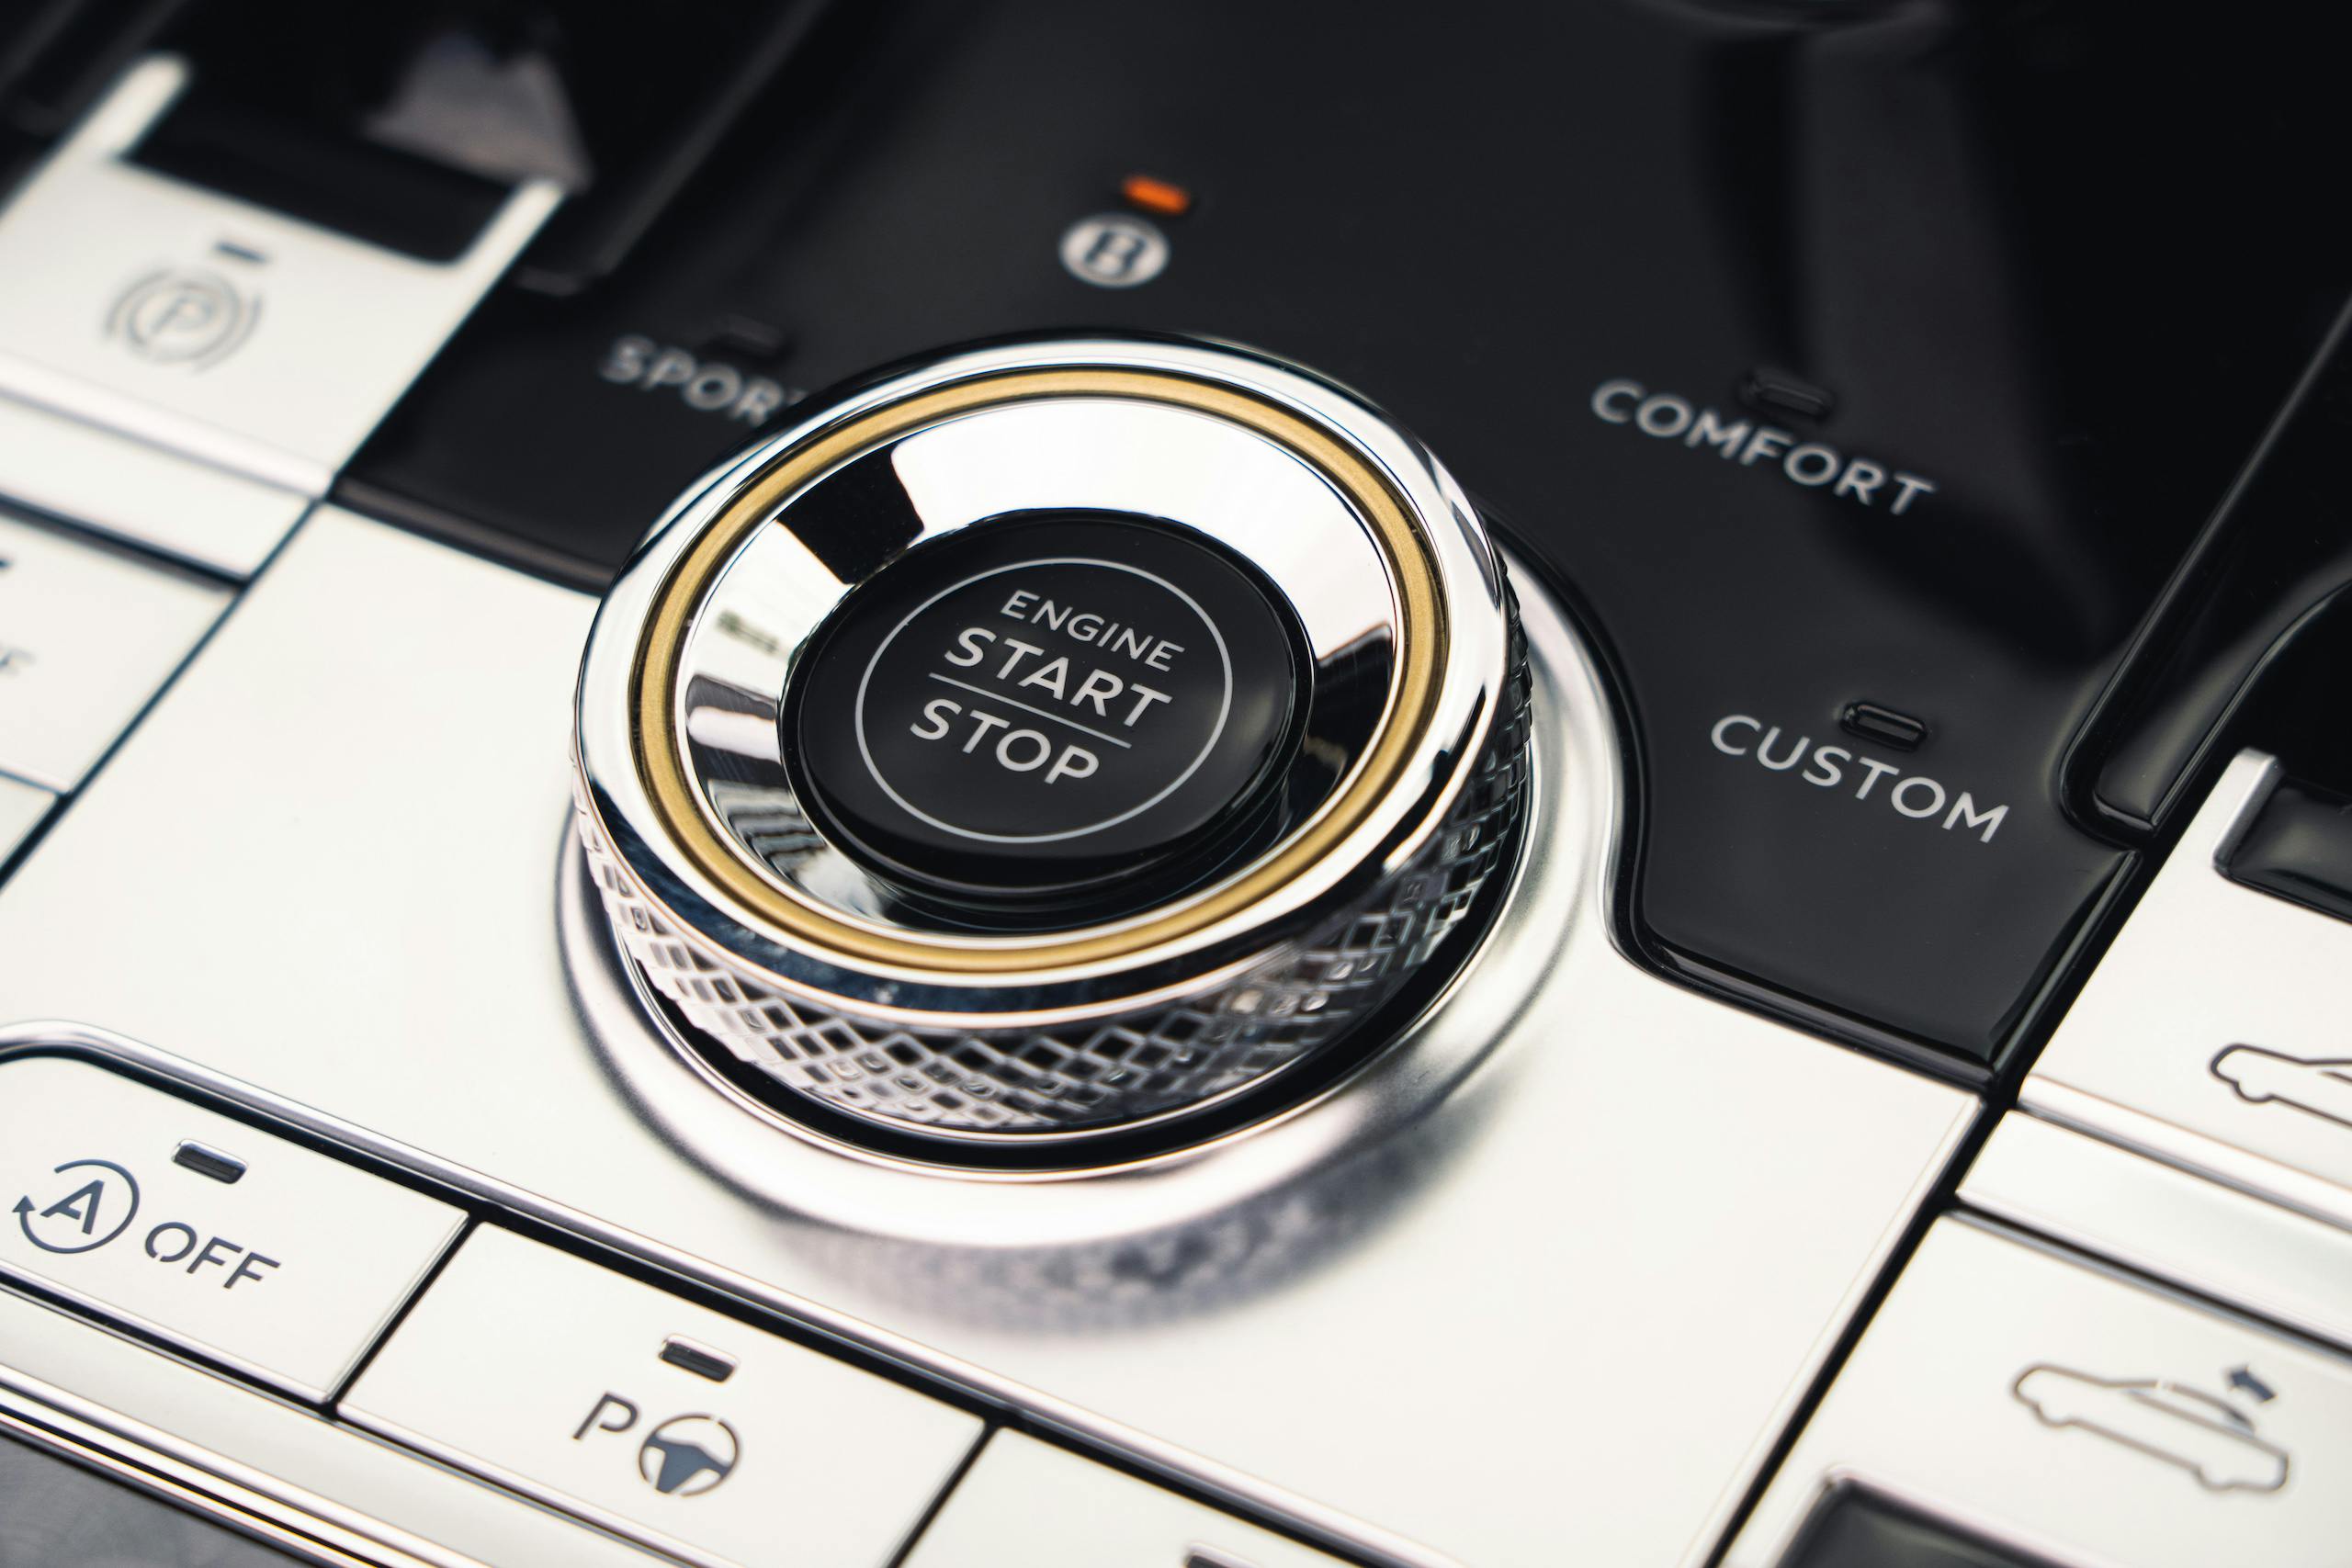 Bentley GT Speed Convertible console start stop dial